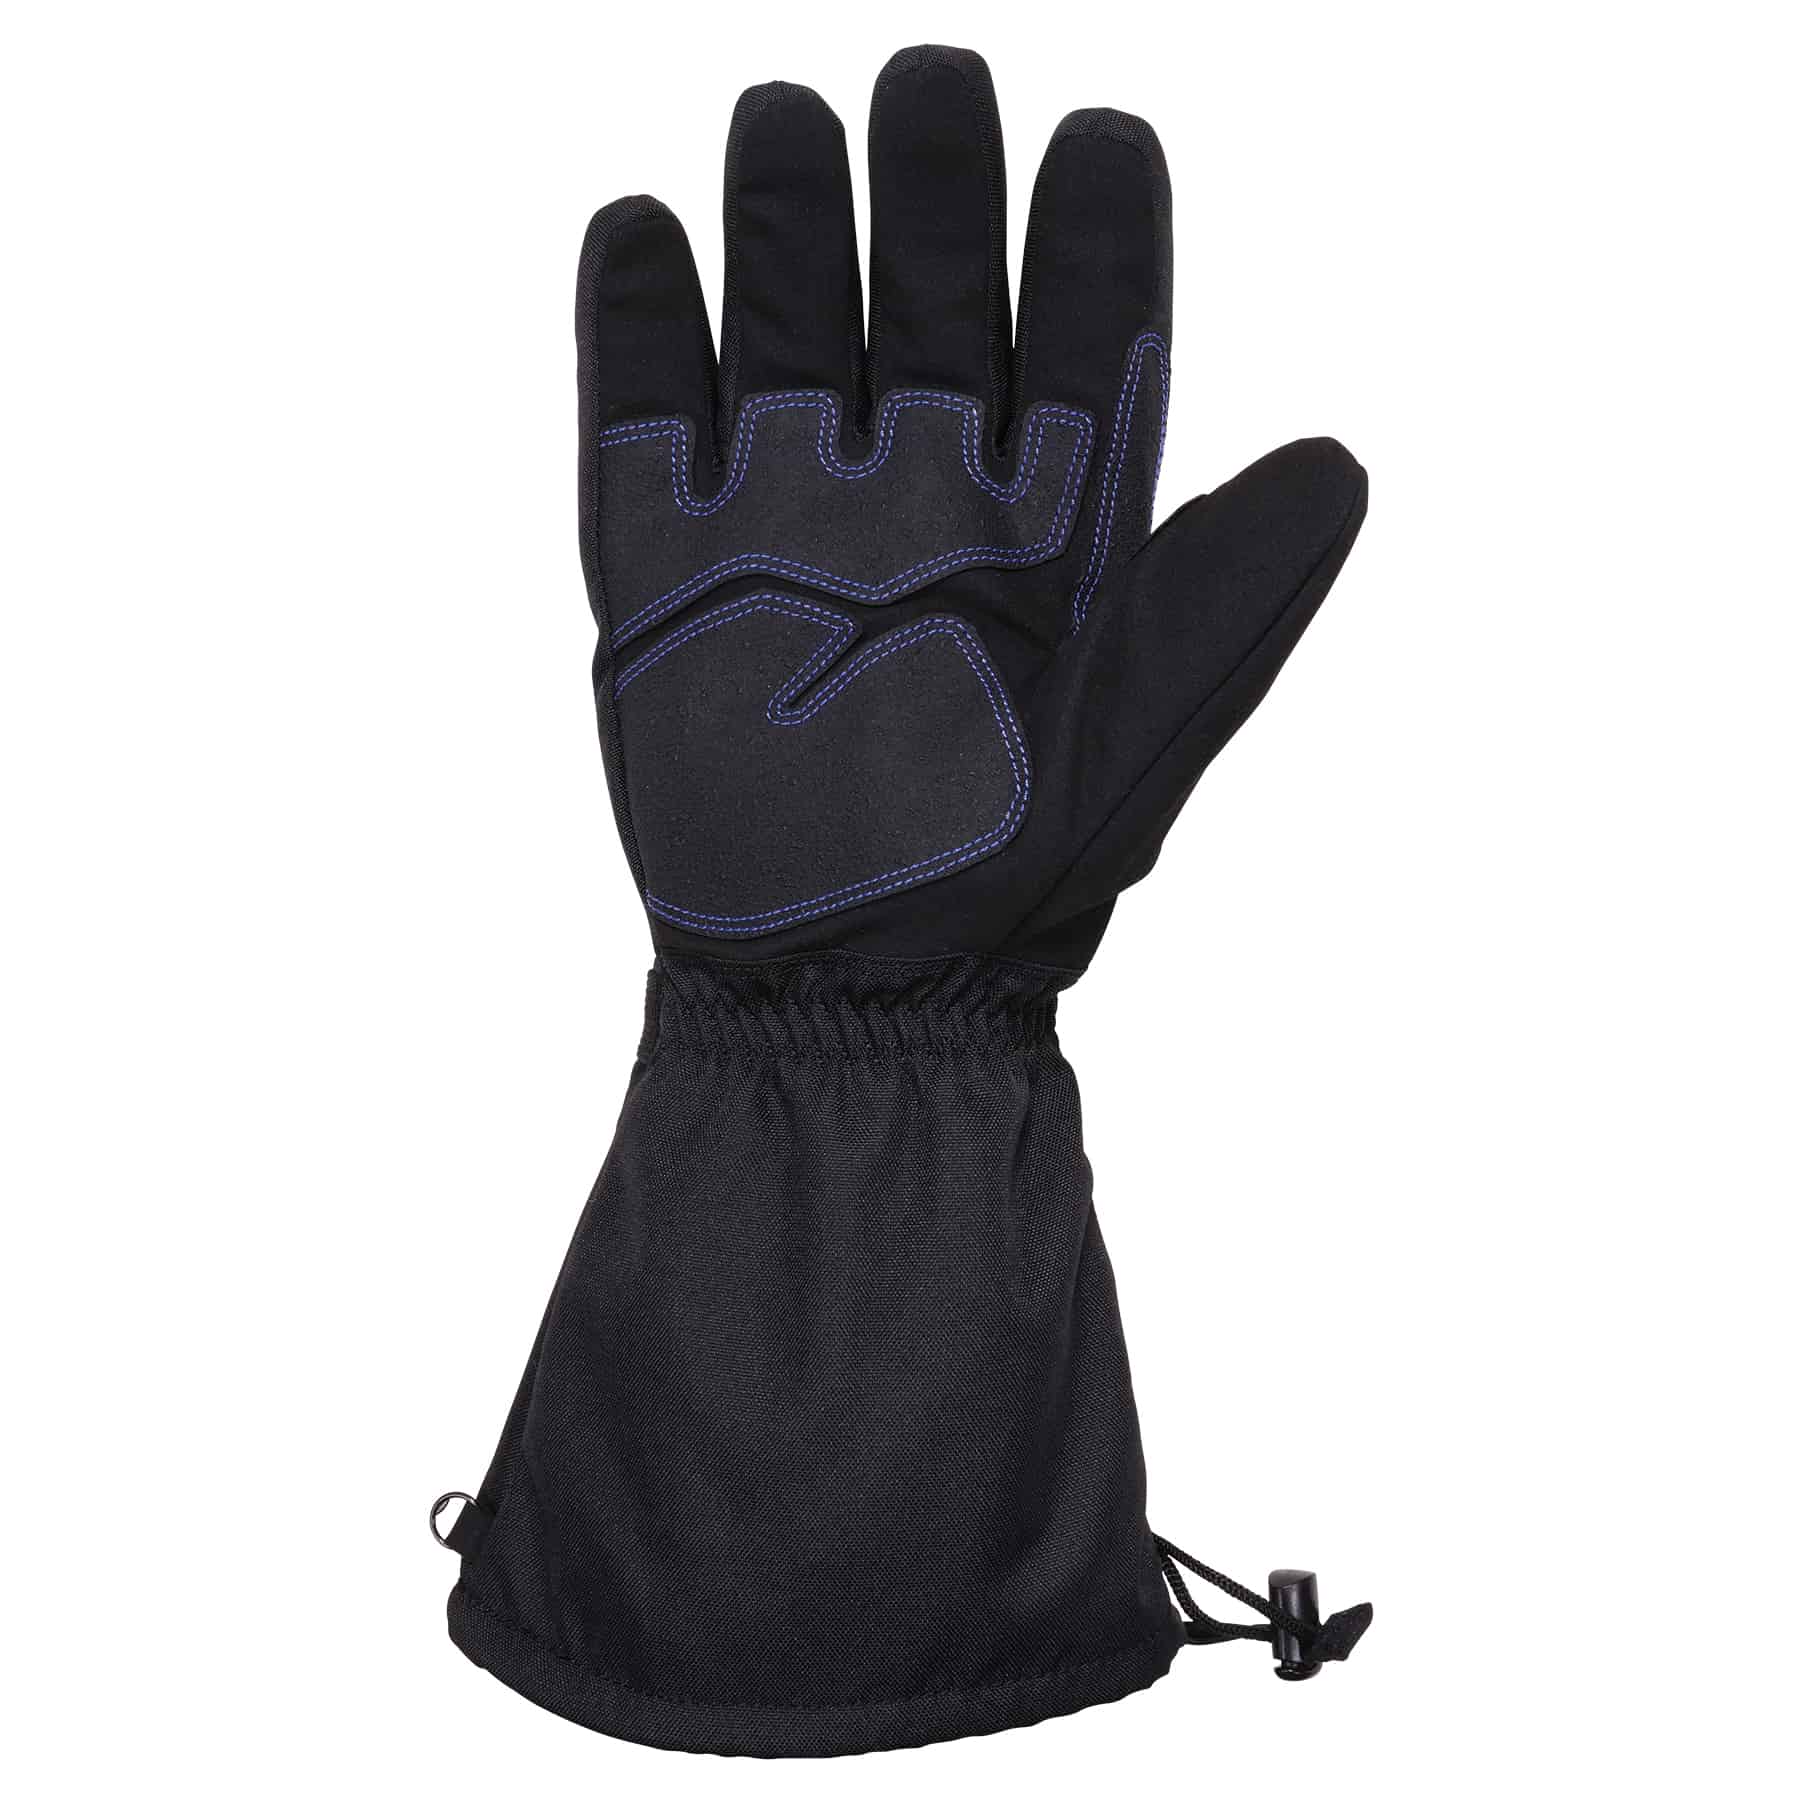 https://www.ergodyne.com/sites/default/files/product-images/17602-825wp-thermal-waterproof-winter-work-gloves-palm.jpg